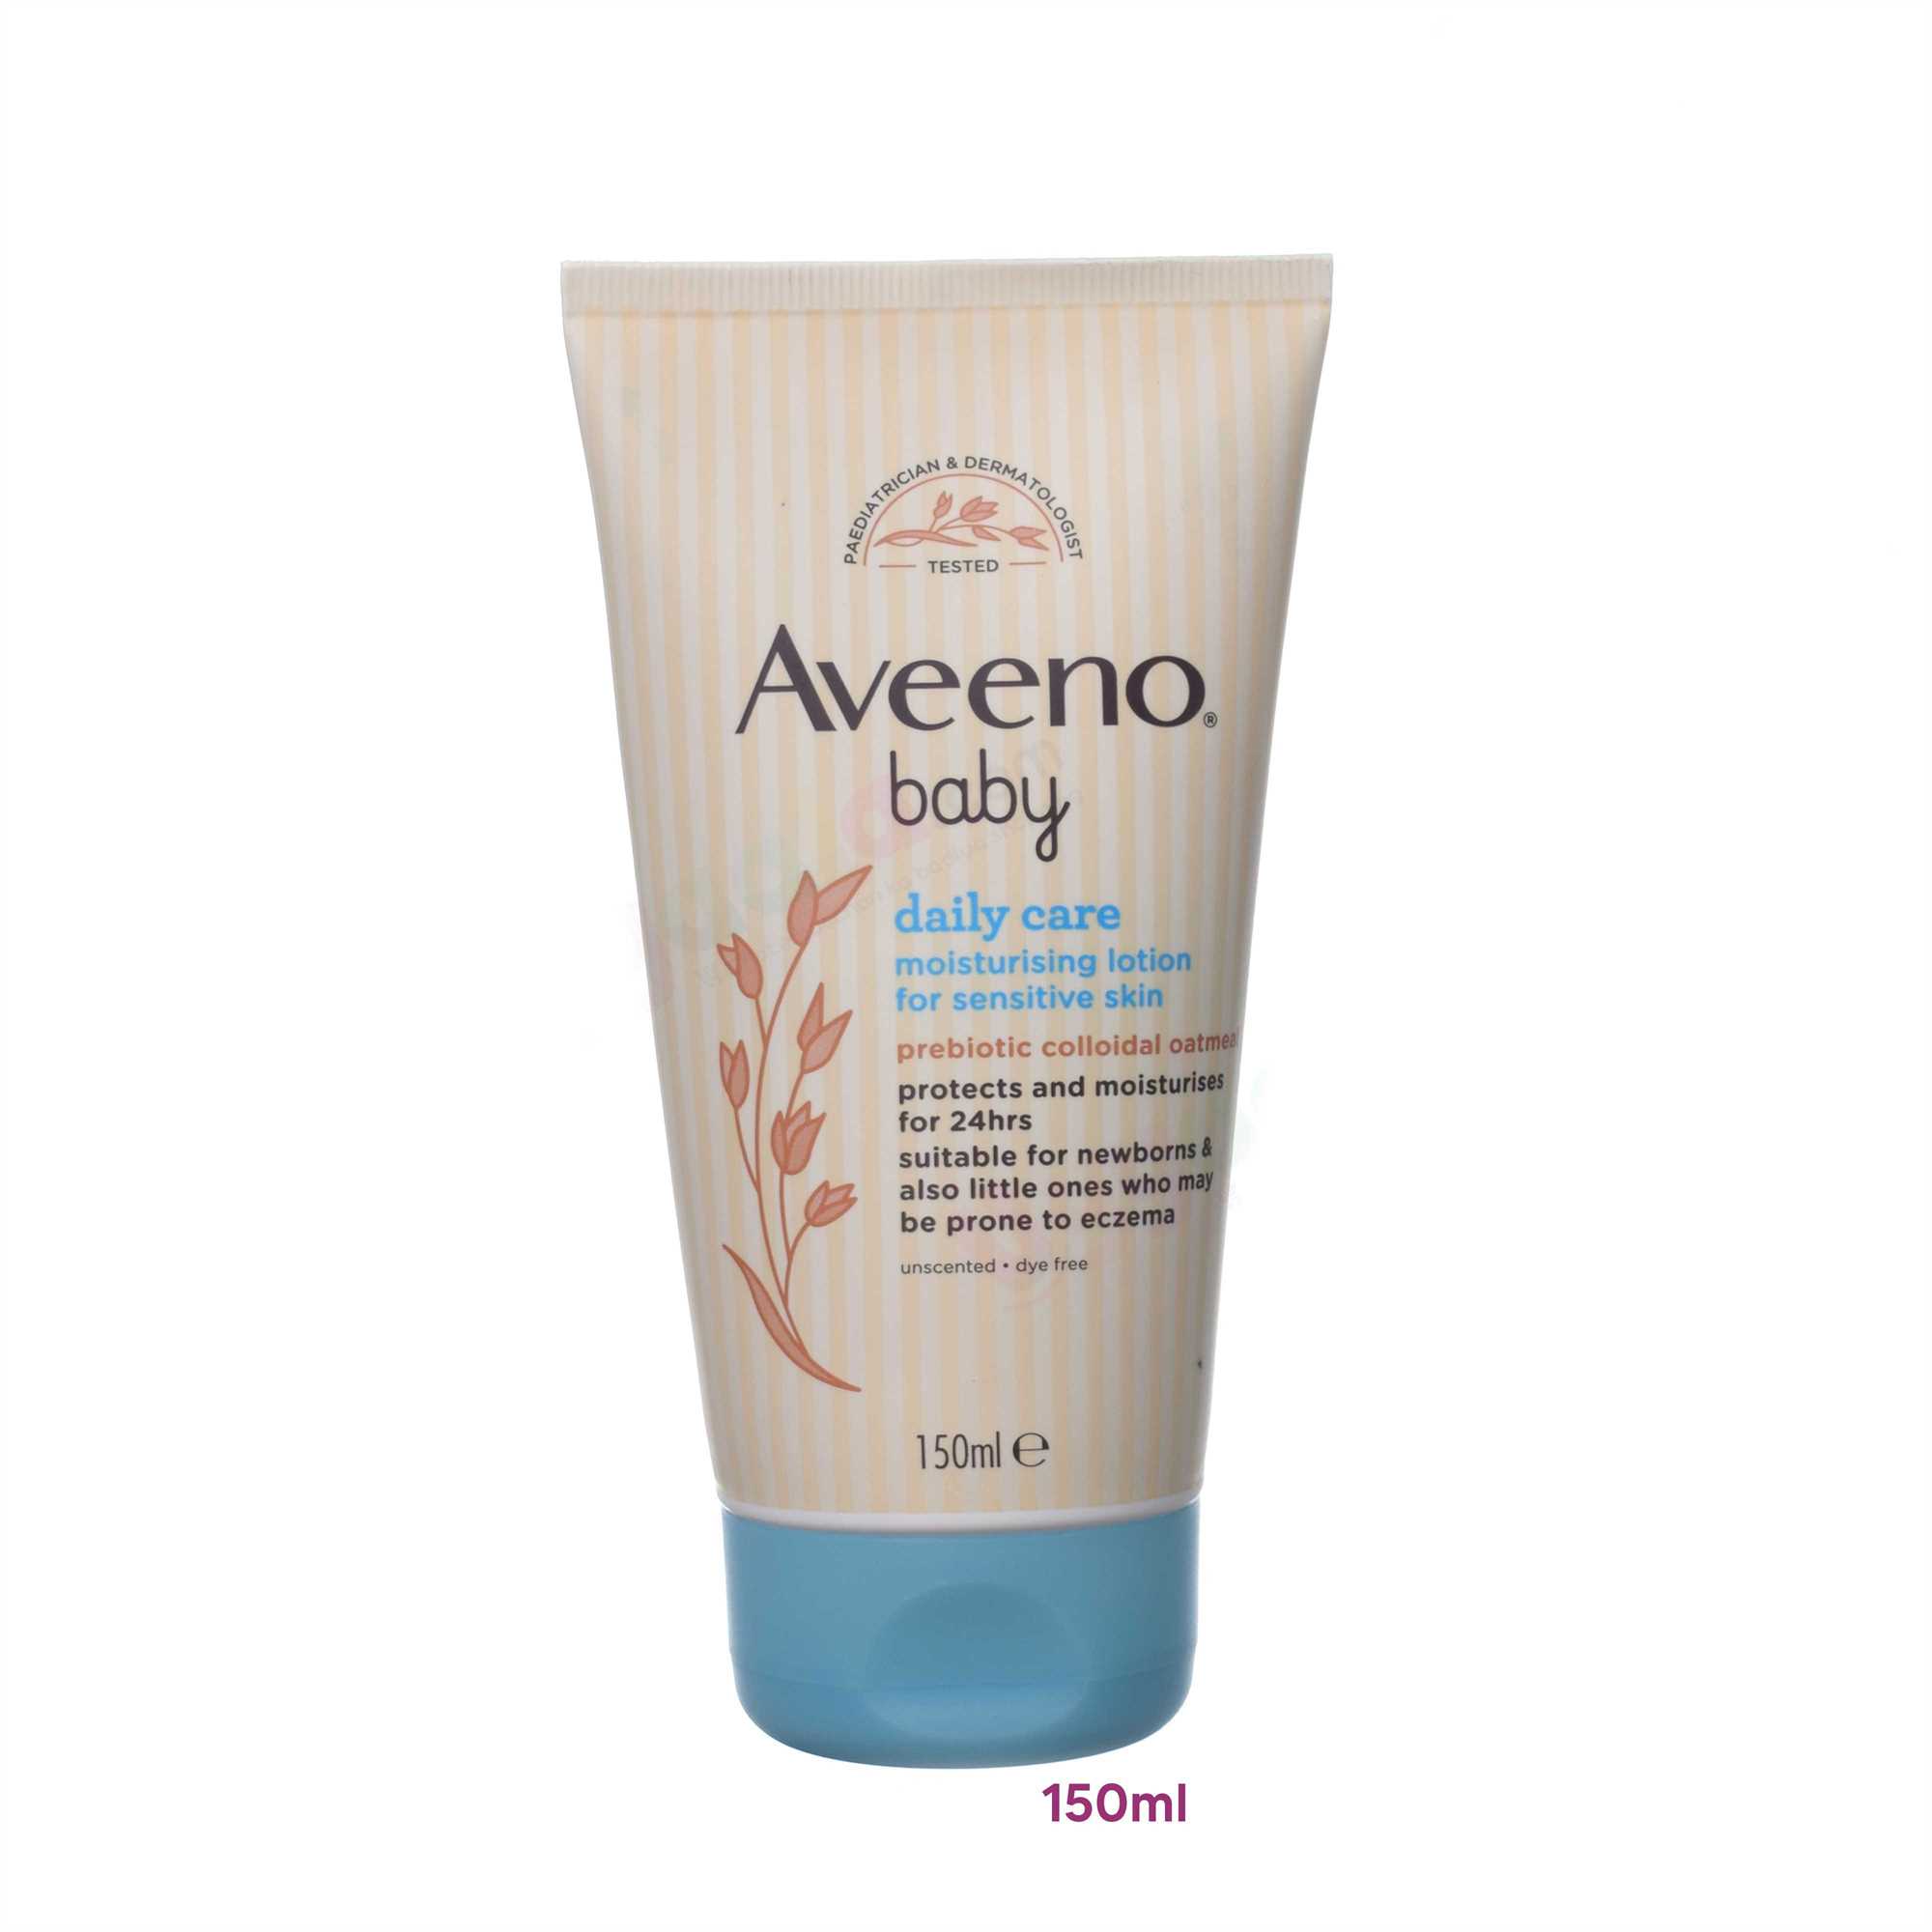 AVEENO BABY daily care moisturizing lotion for sensitive skin - 150ml